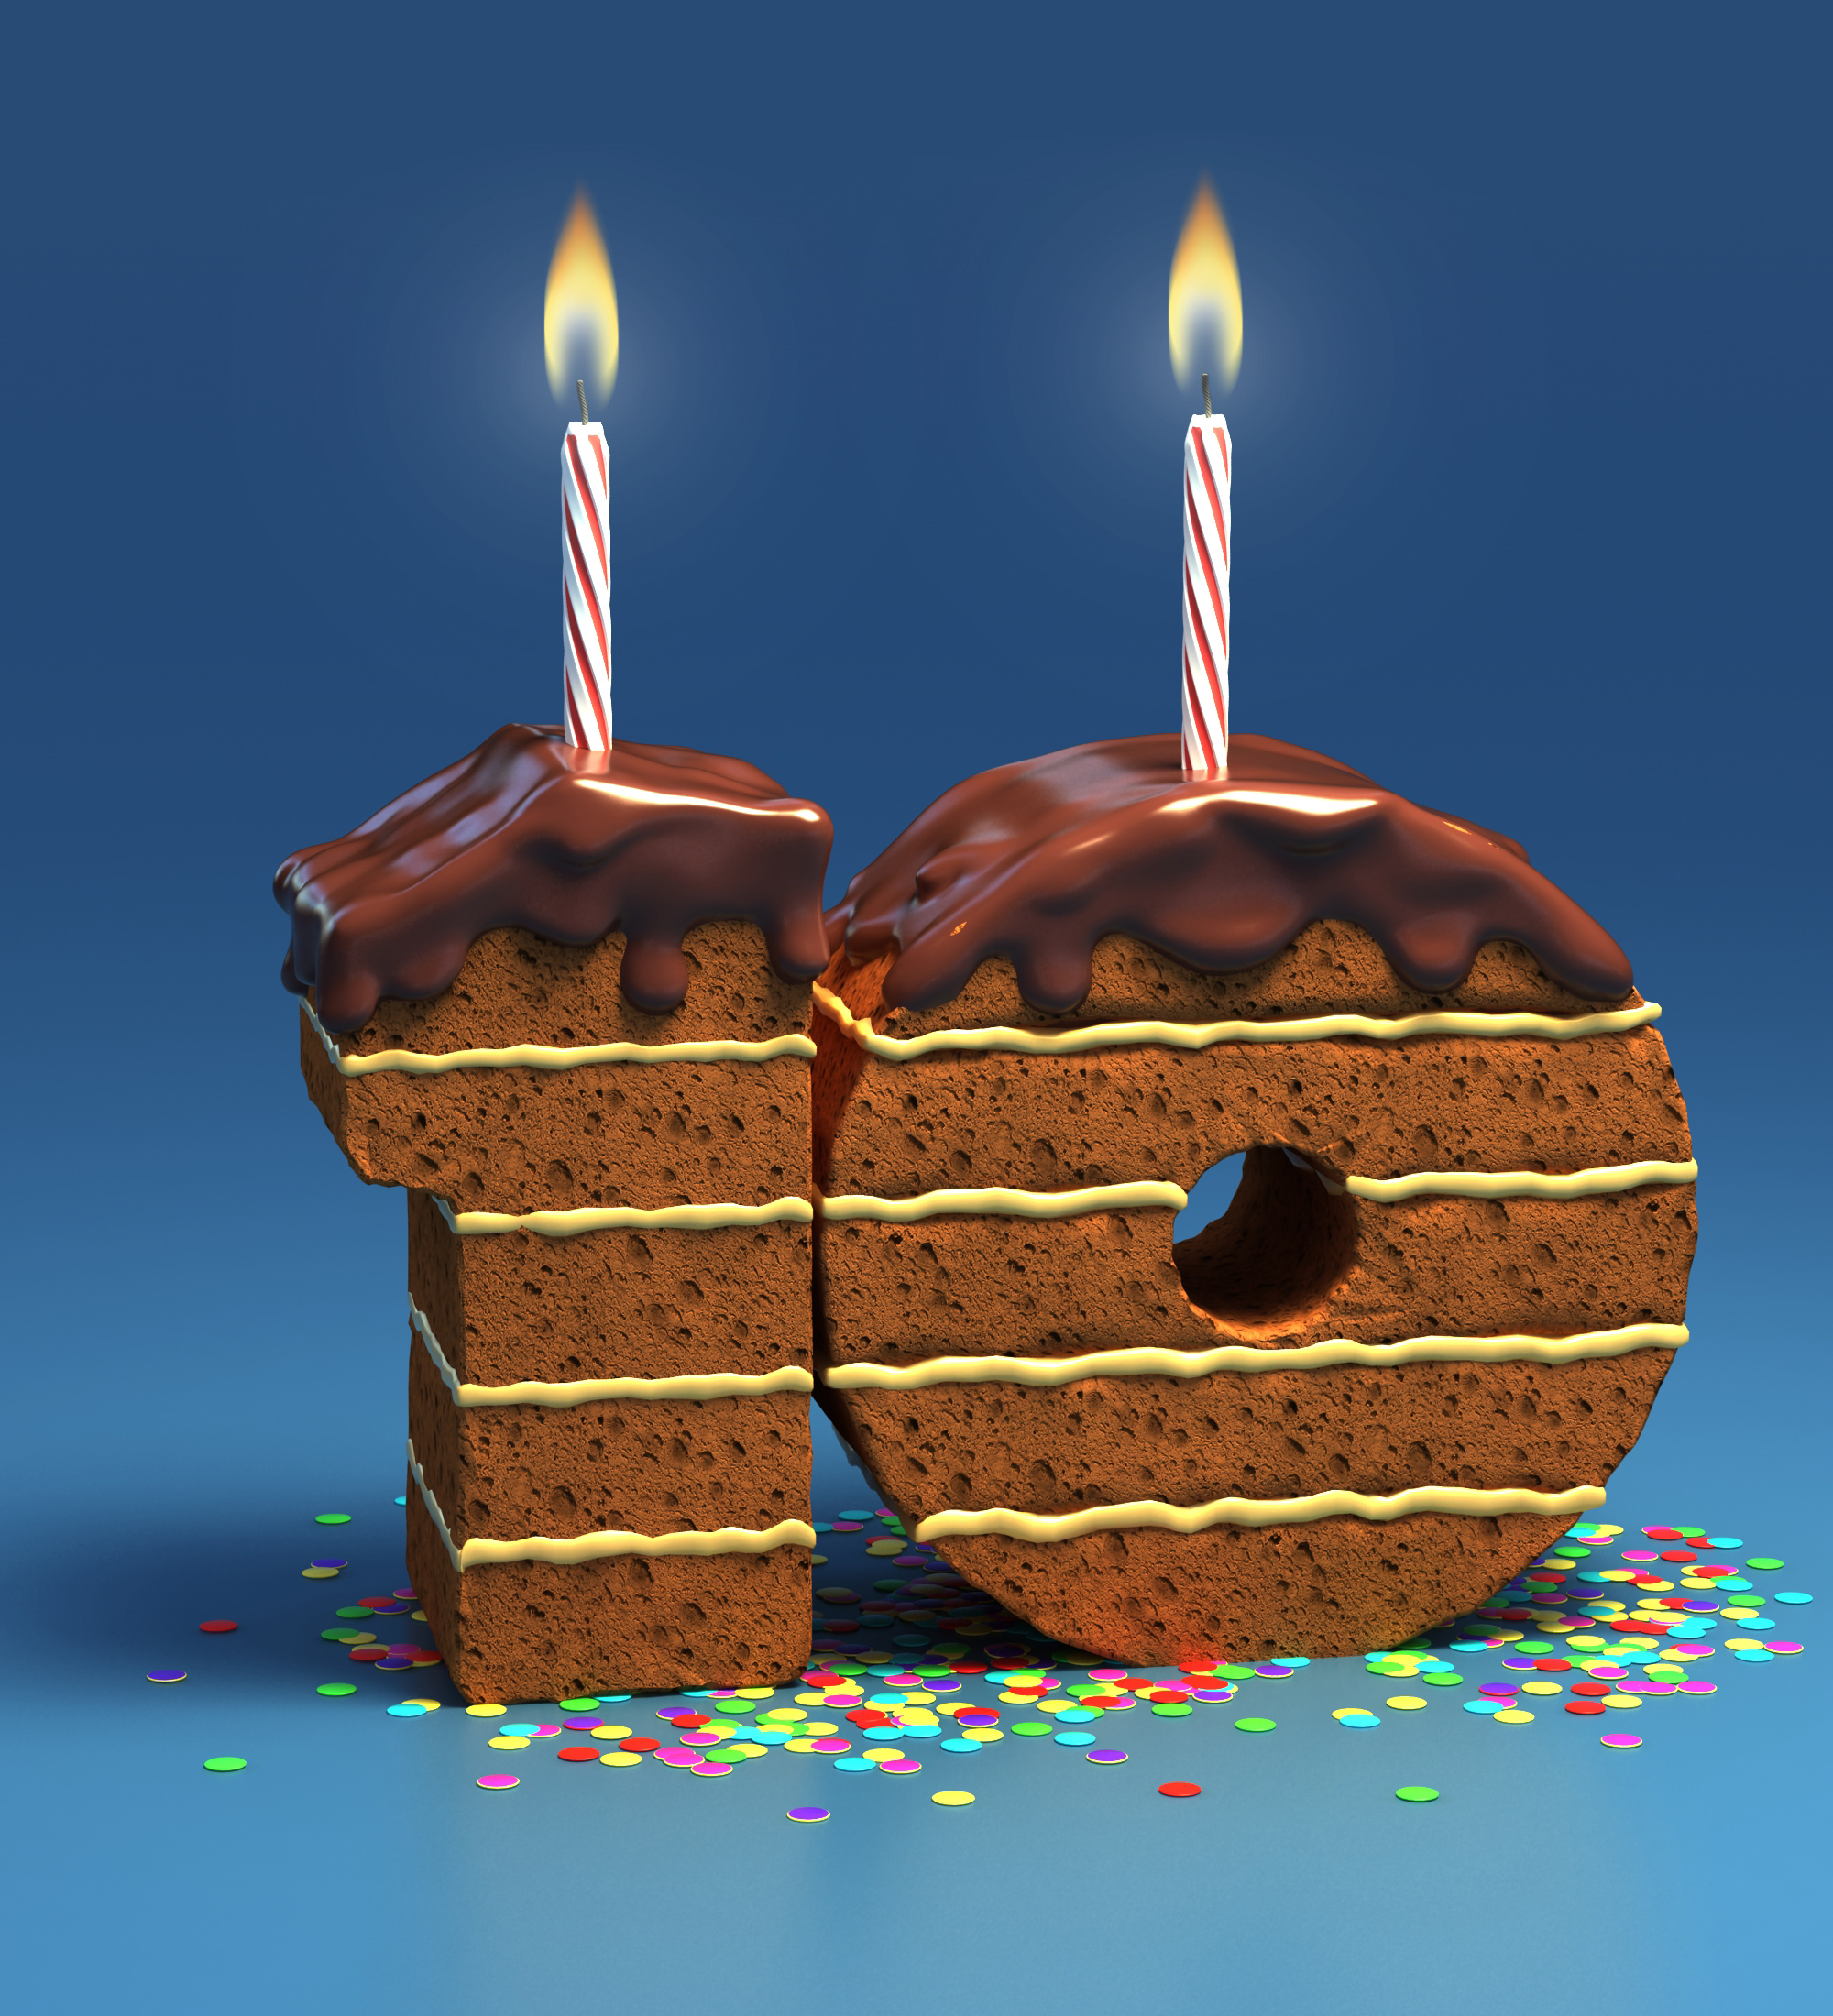 https://depositphotos.com/9516817/stock-photo-chocolate-birthday-cake.html